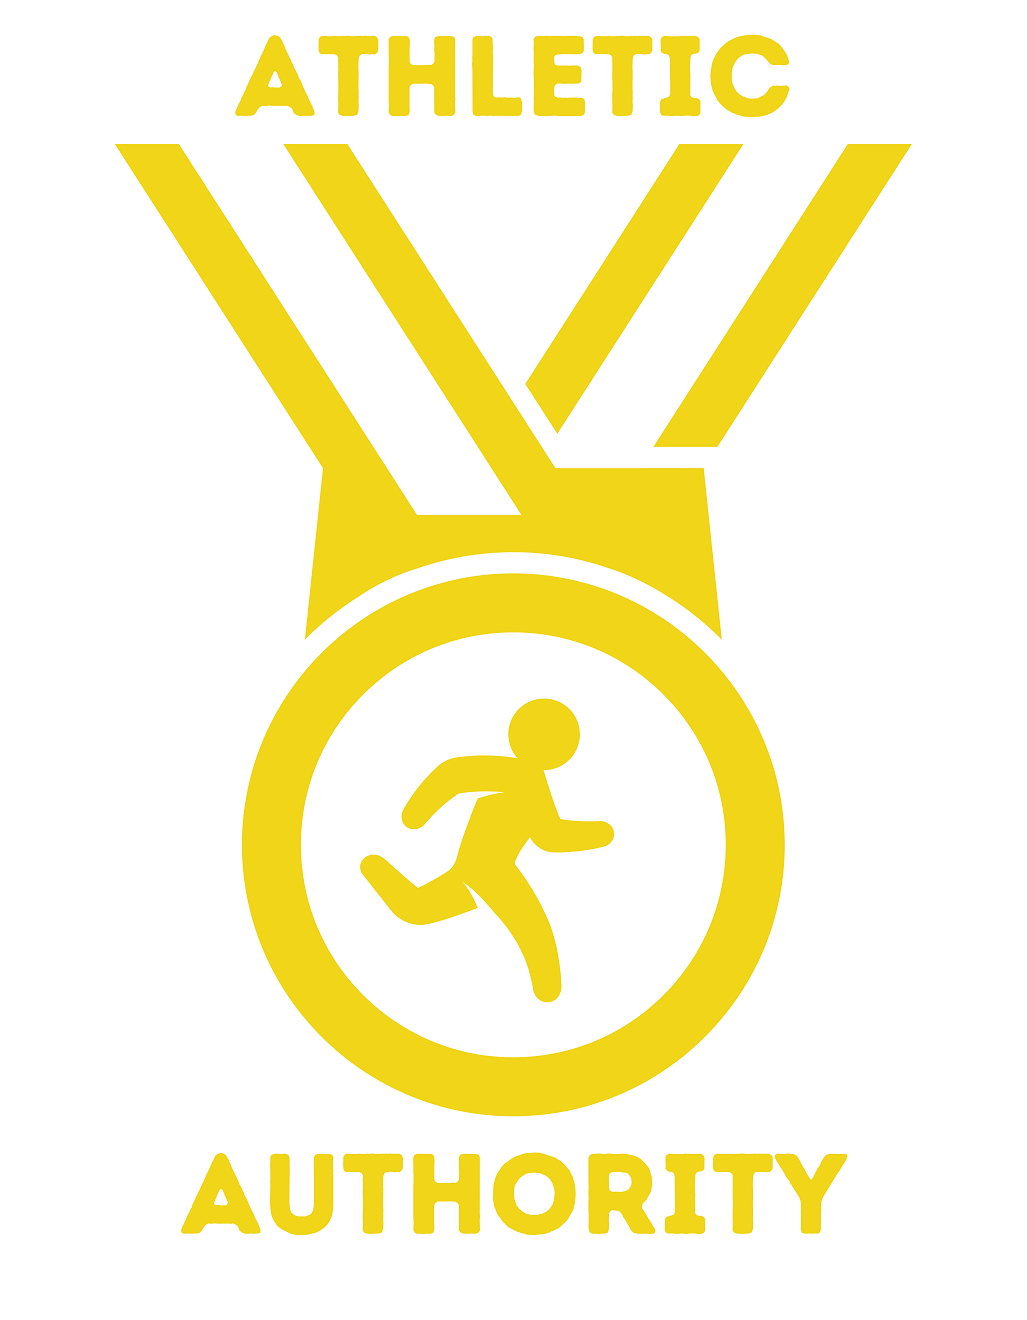 Athletic Authority  "Gold Medal" Unisex Tri-Blend Short sleeve t-shirt